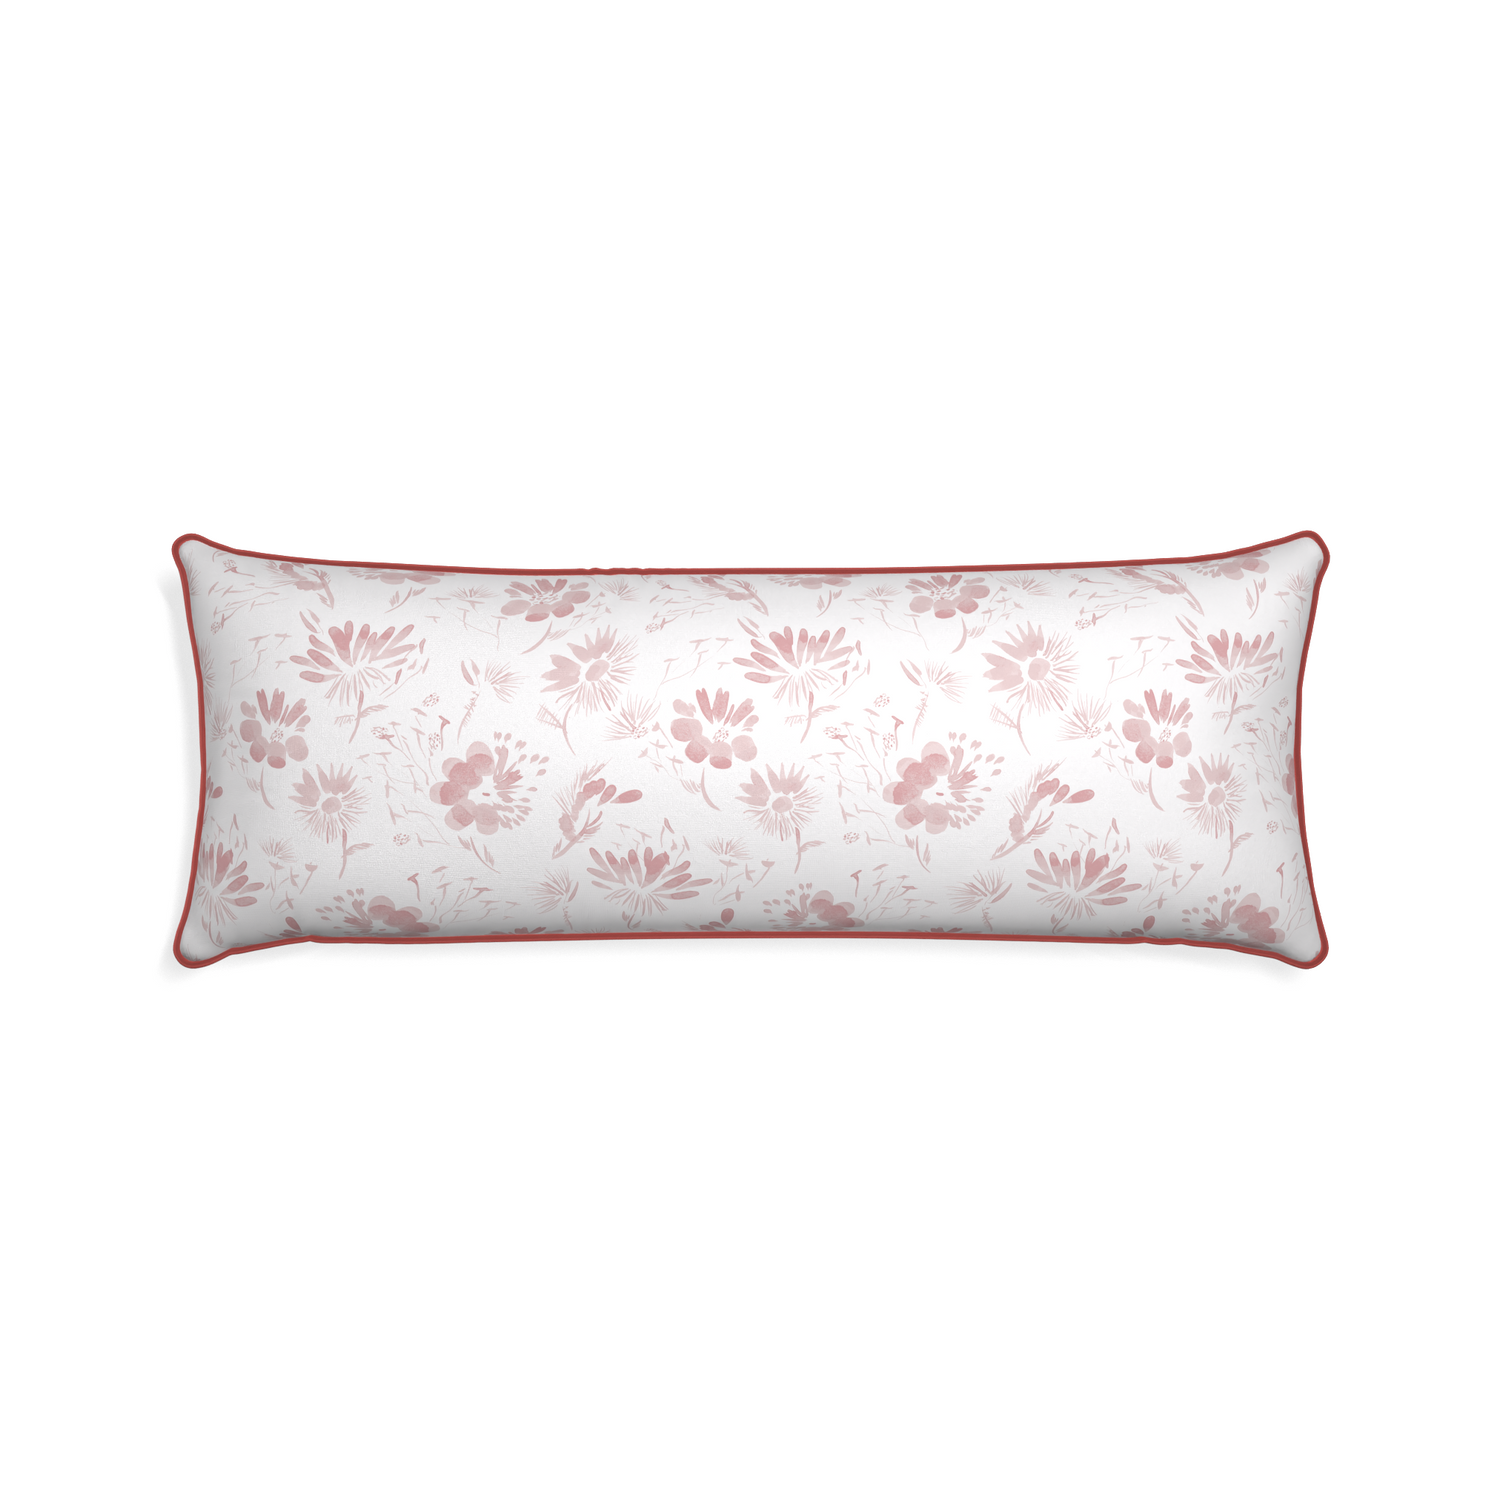 Xl-lumbar blake custom pink floralpillow with c piping on white background